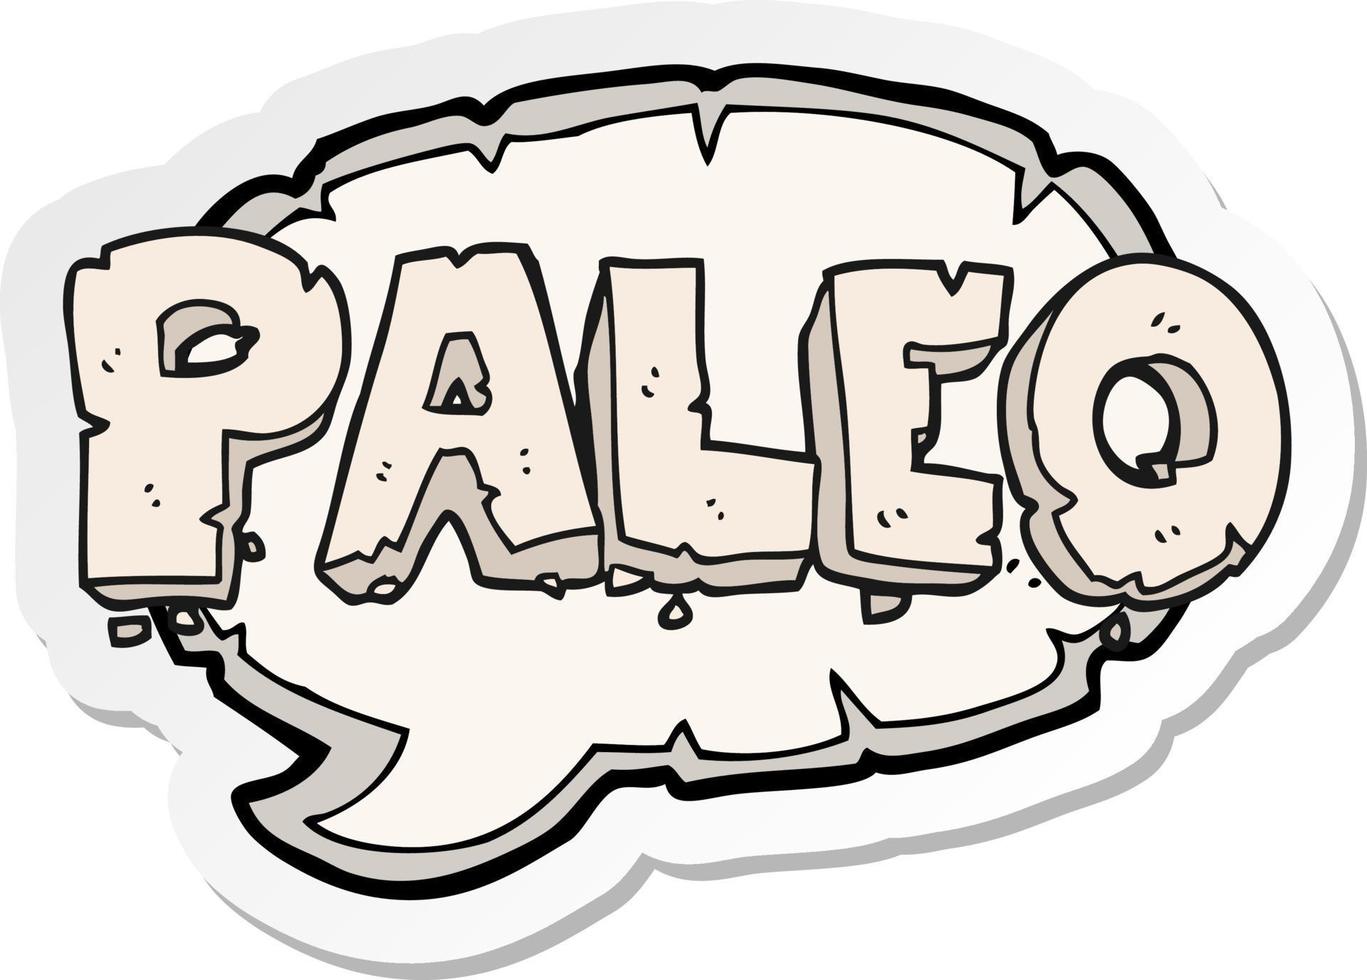 sticker of a paleo cartoon sign vector